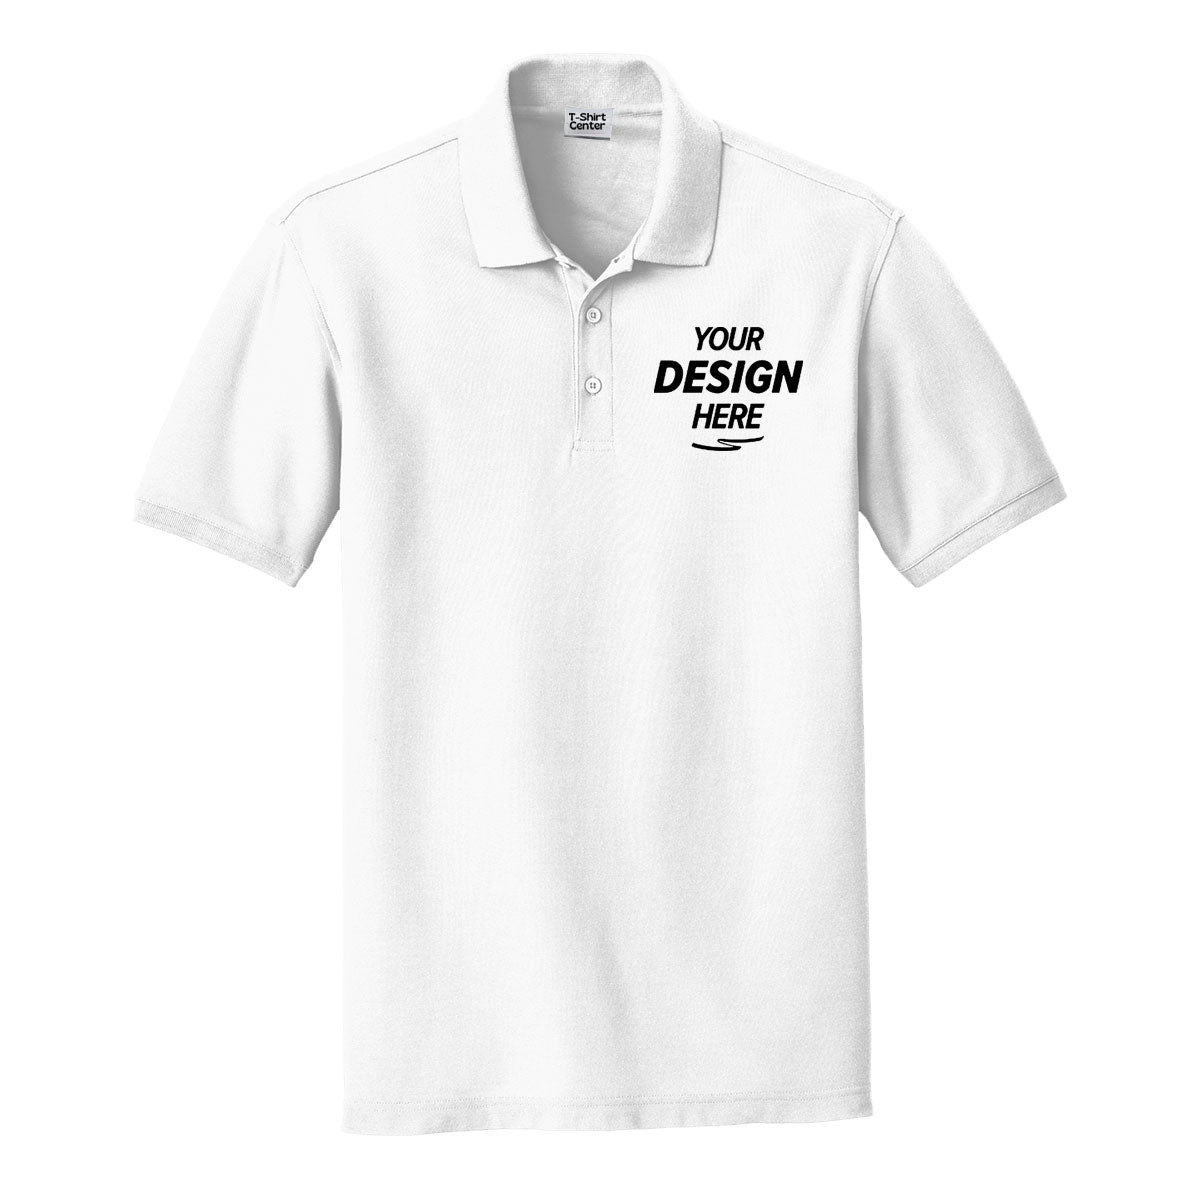 25 Cotton Polo Shirts ($399) + Free shipping